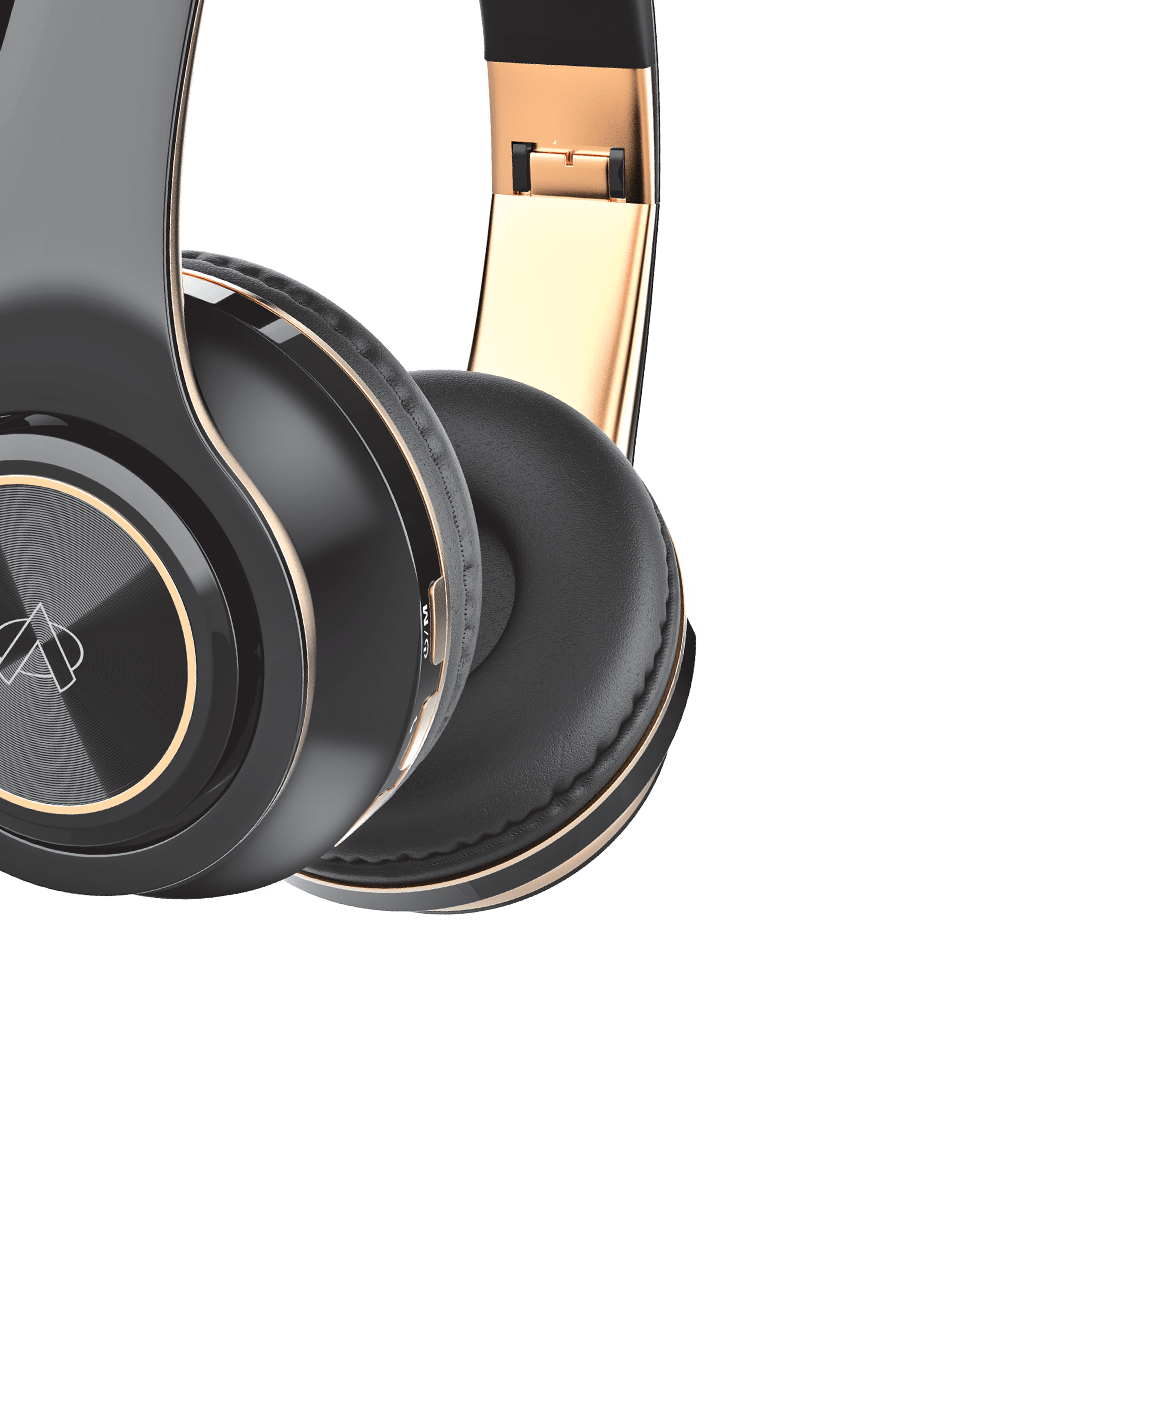 A-110 (Bluetooth Headphone) - Audionic - The Sound Master